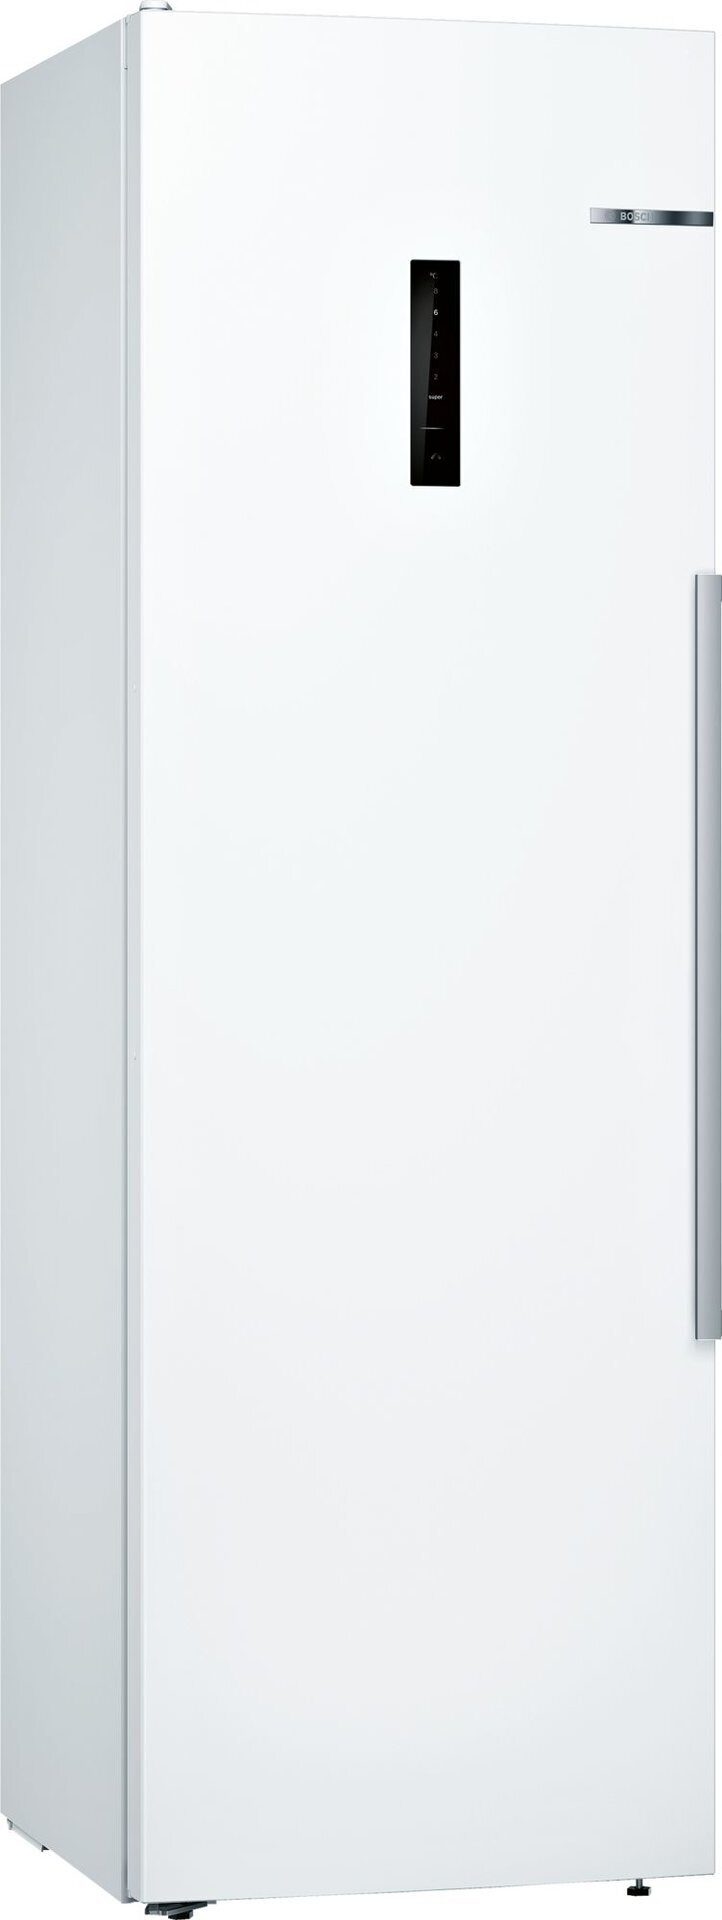 Морозильный шкаф Indesit DFZ 4150.1